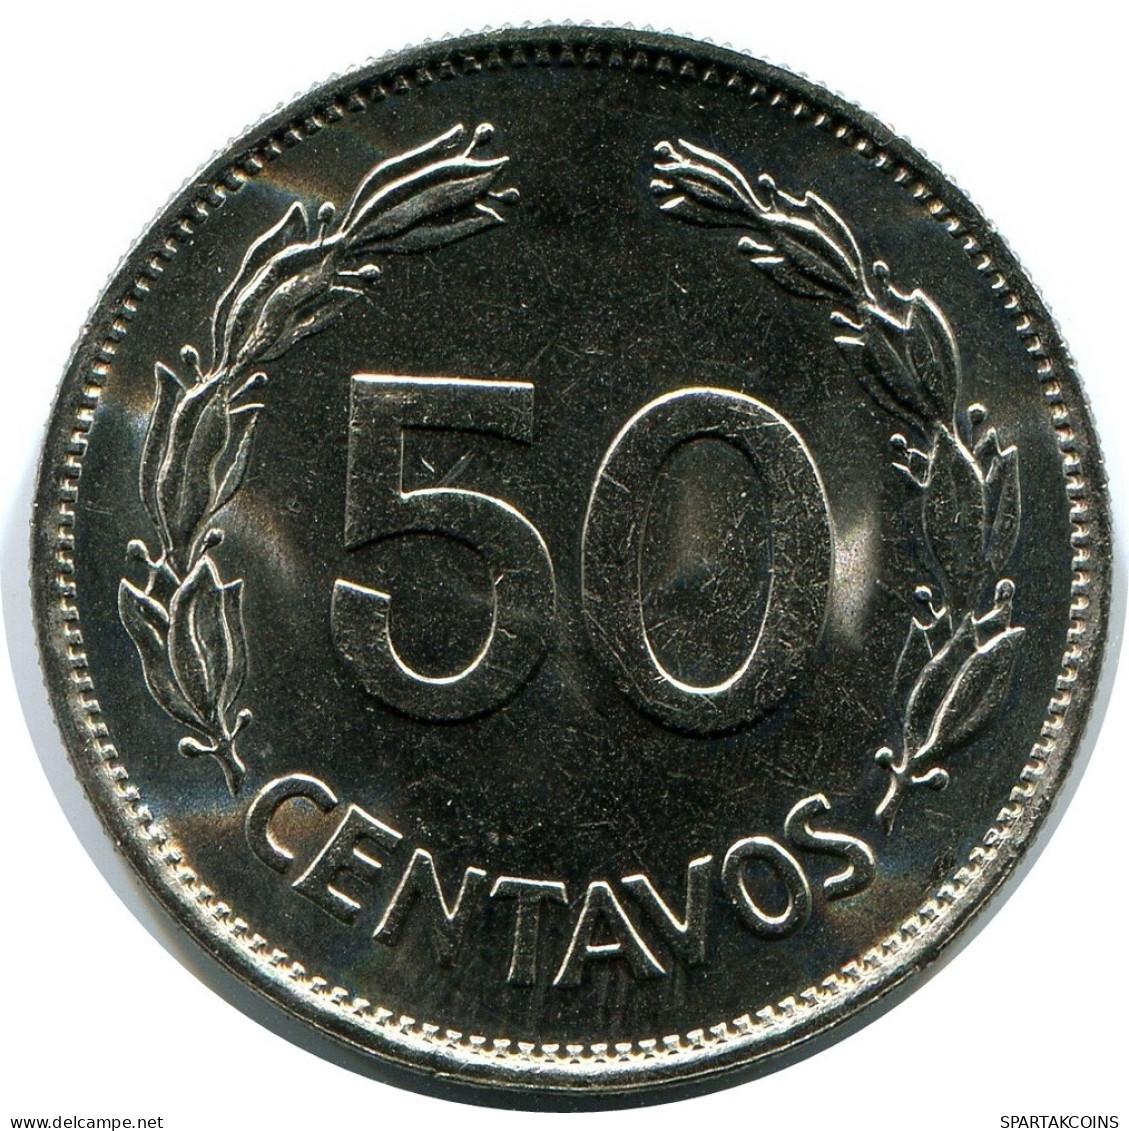 50 CENTAVOS 1979 ECUADOR Münze #AZ167.D.A - Ecuador